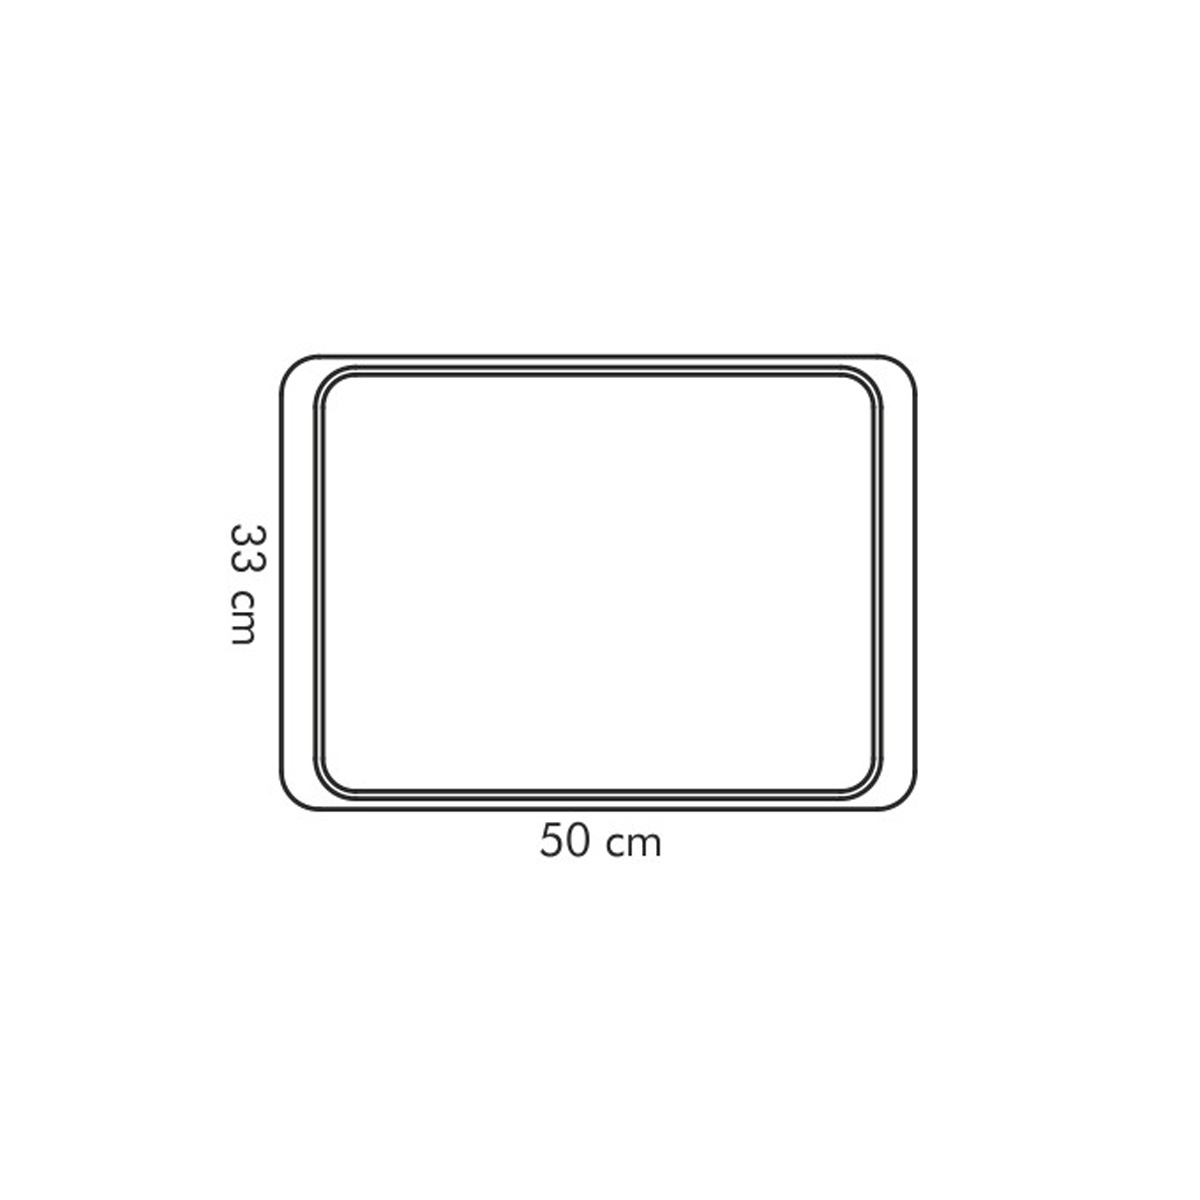 Tabuleiro FLAIR com base antideslizante, 50x33 cm